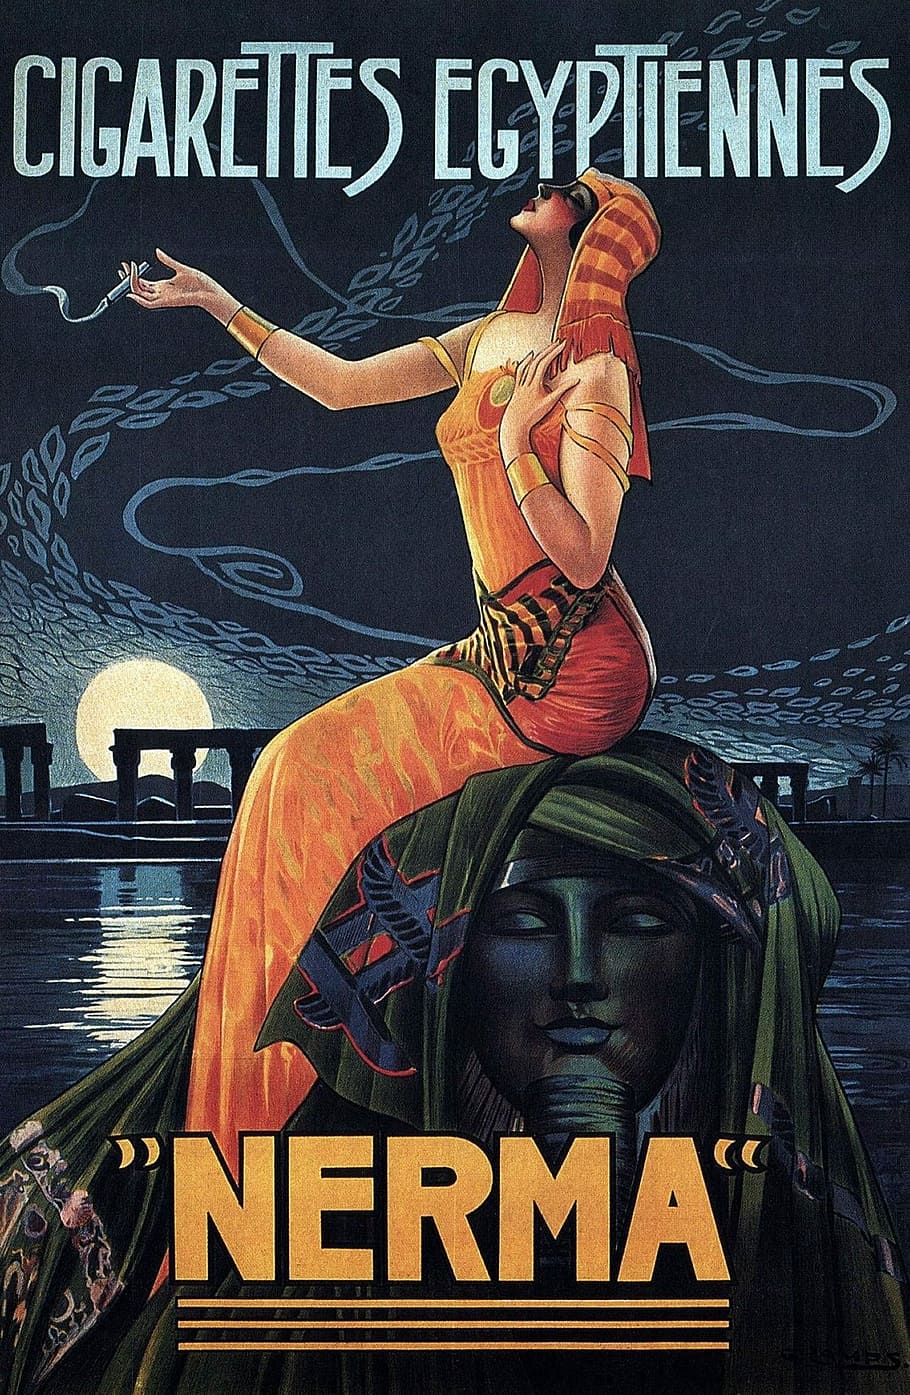 HD wallpaper: Cigarettes Egytiennes Nerma text, vintage, poster, print, advertisement